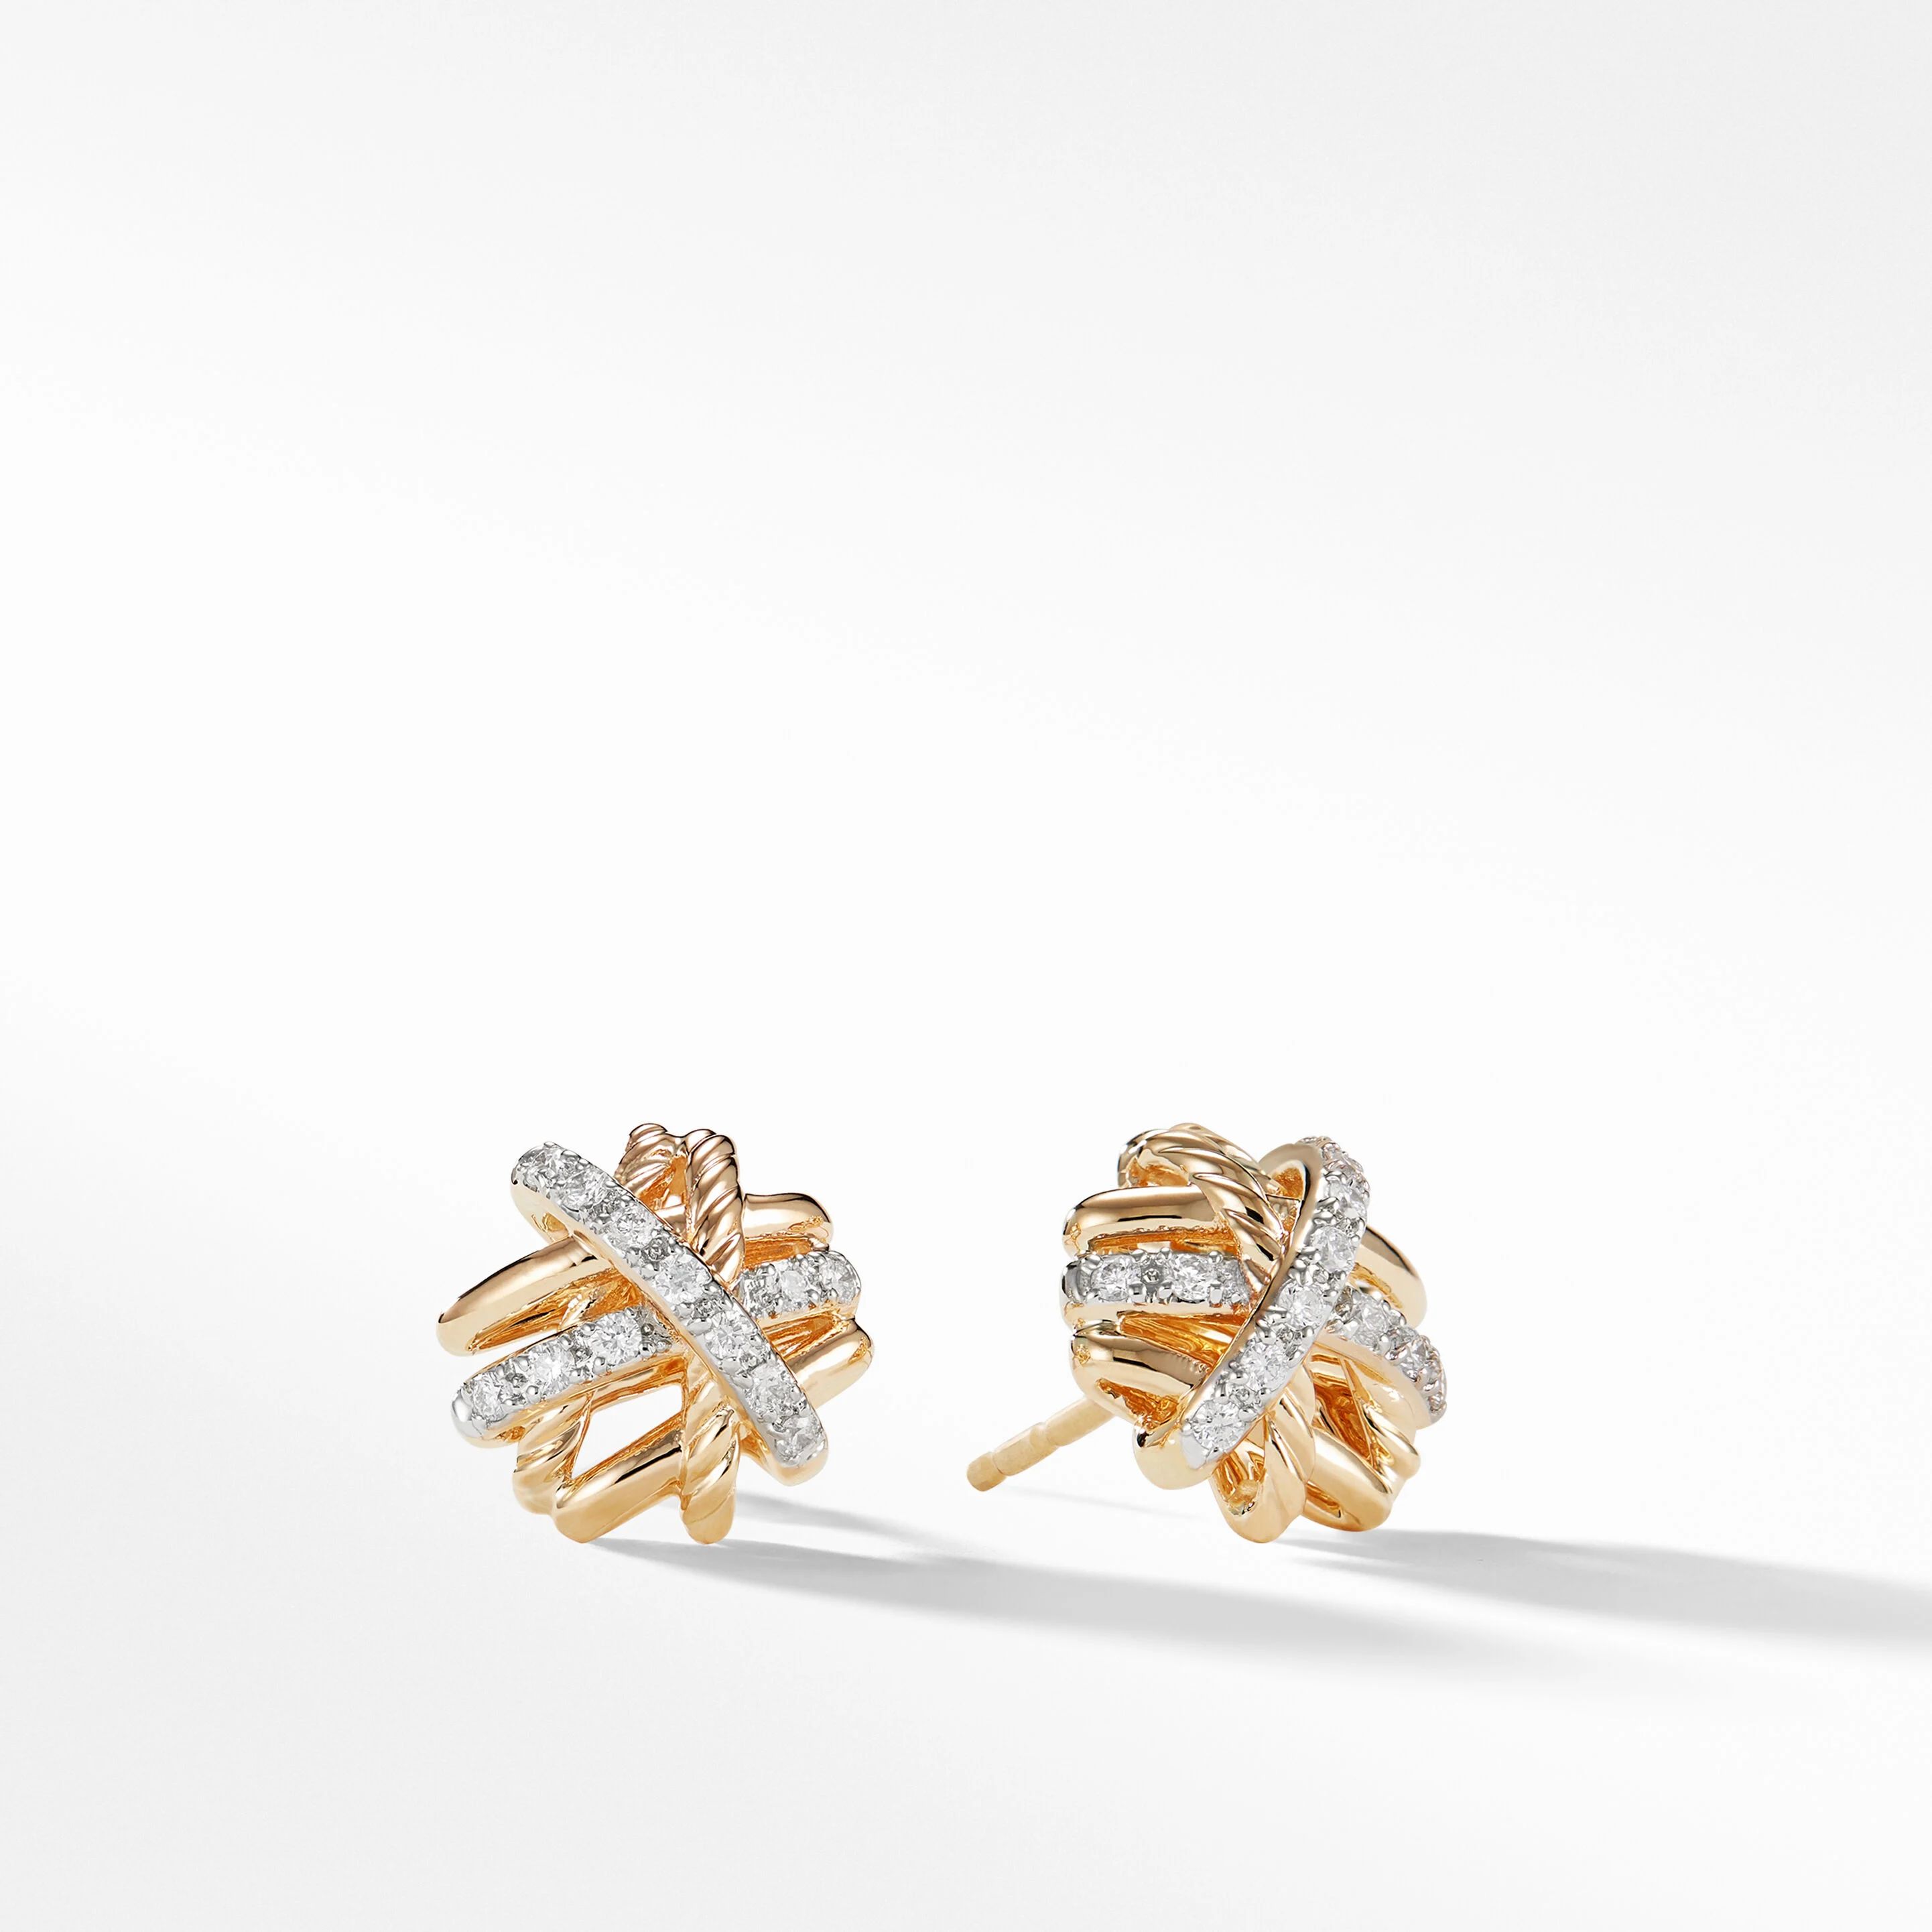 Crossover Stud Earrings in 18K Yellow Gold with Pavé Diamonds | David Yurman